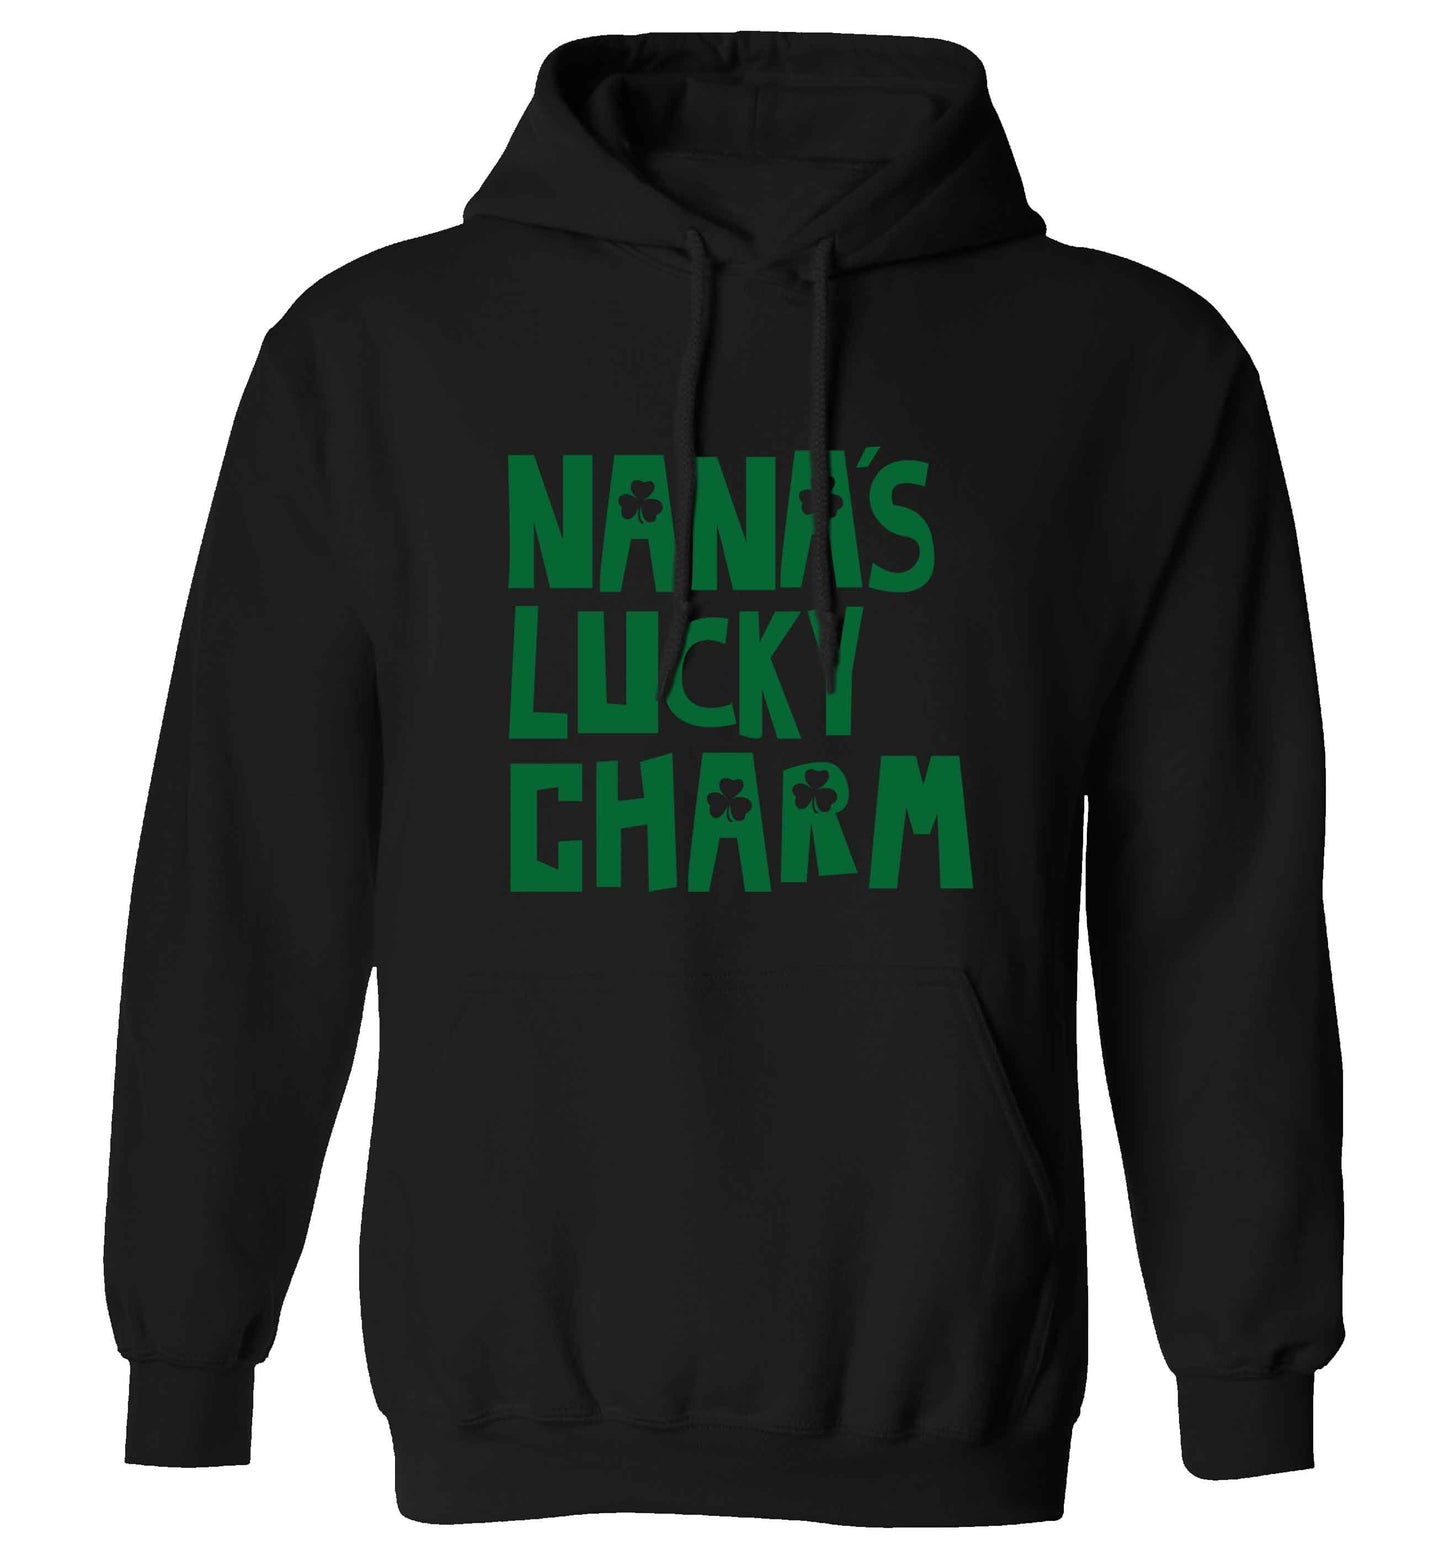 Nana's lucky charm adults unisex black hoodie 2XL